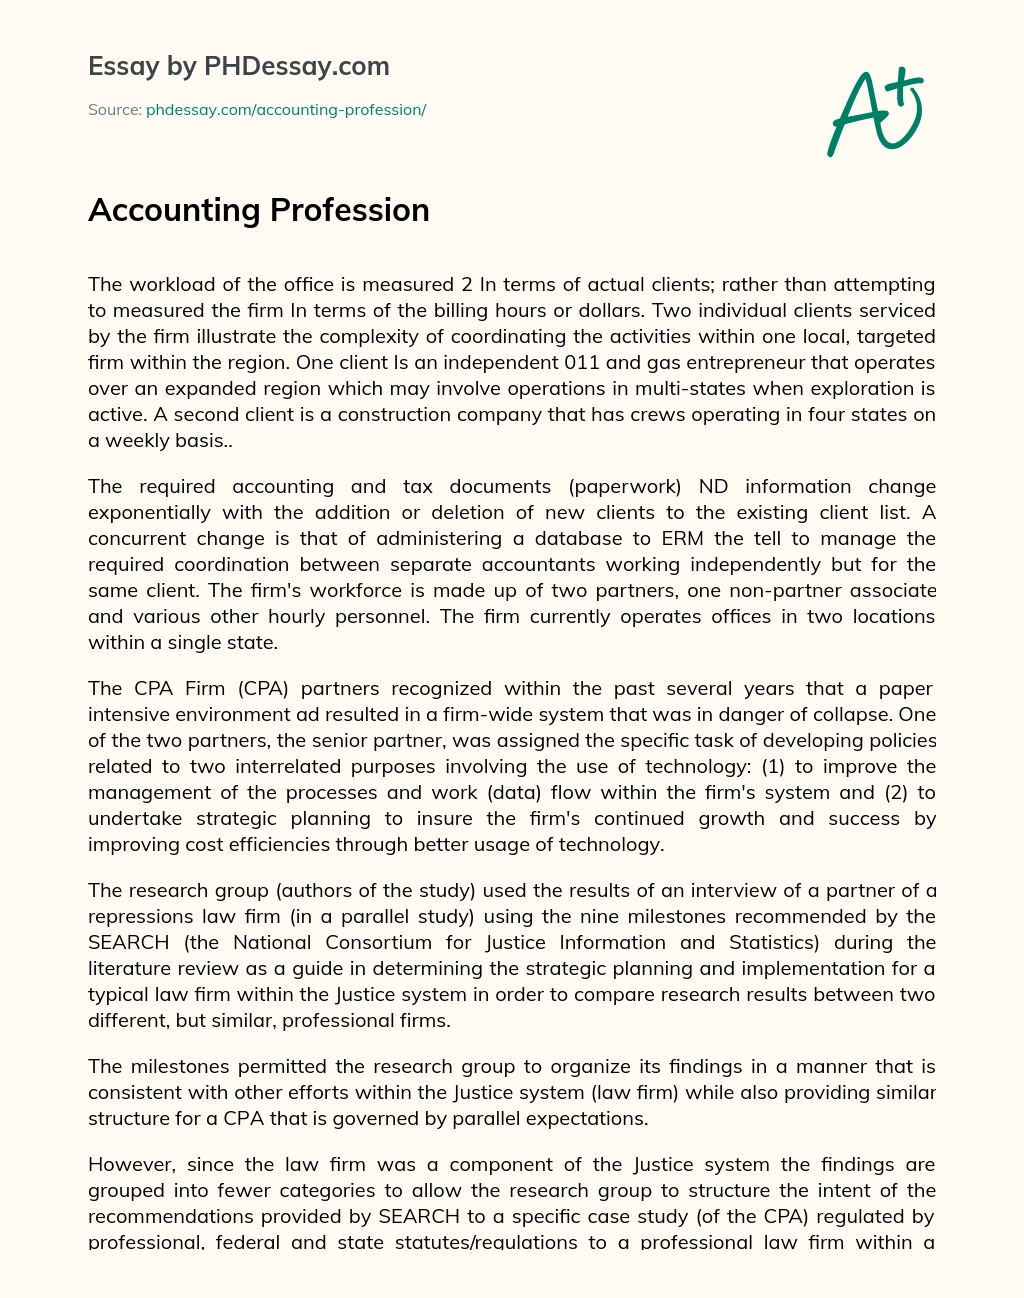 Accounting Profession essay